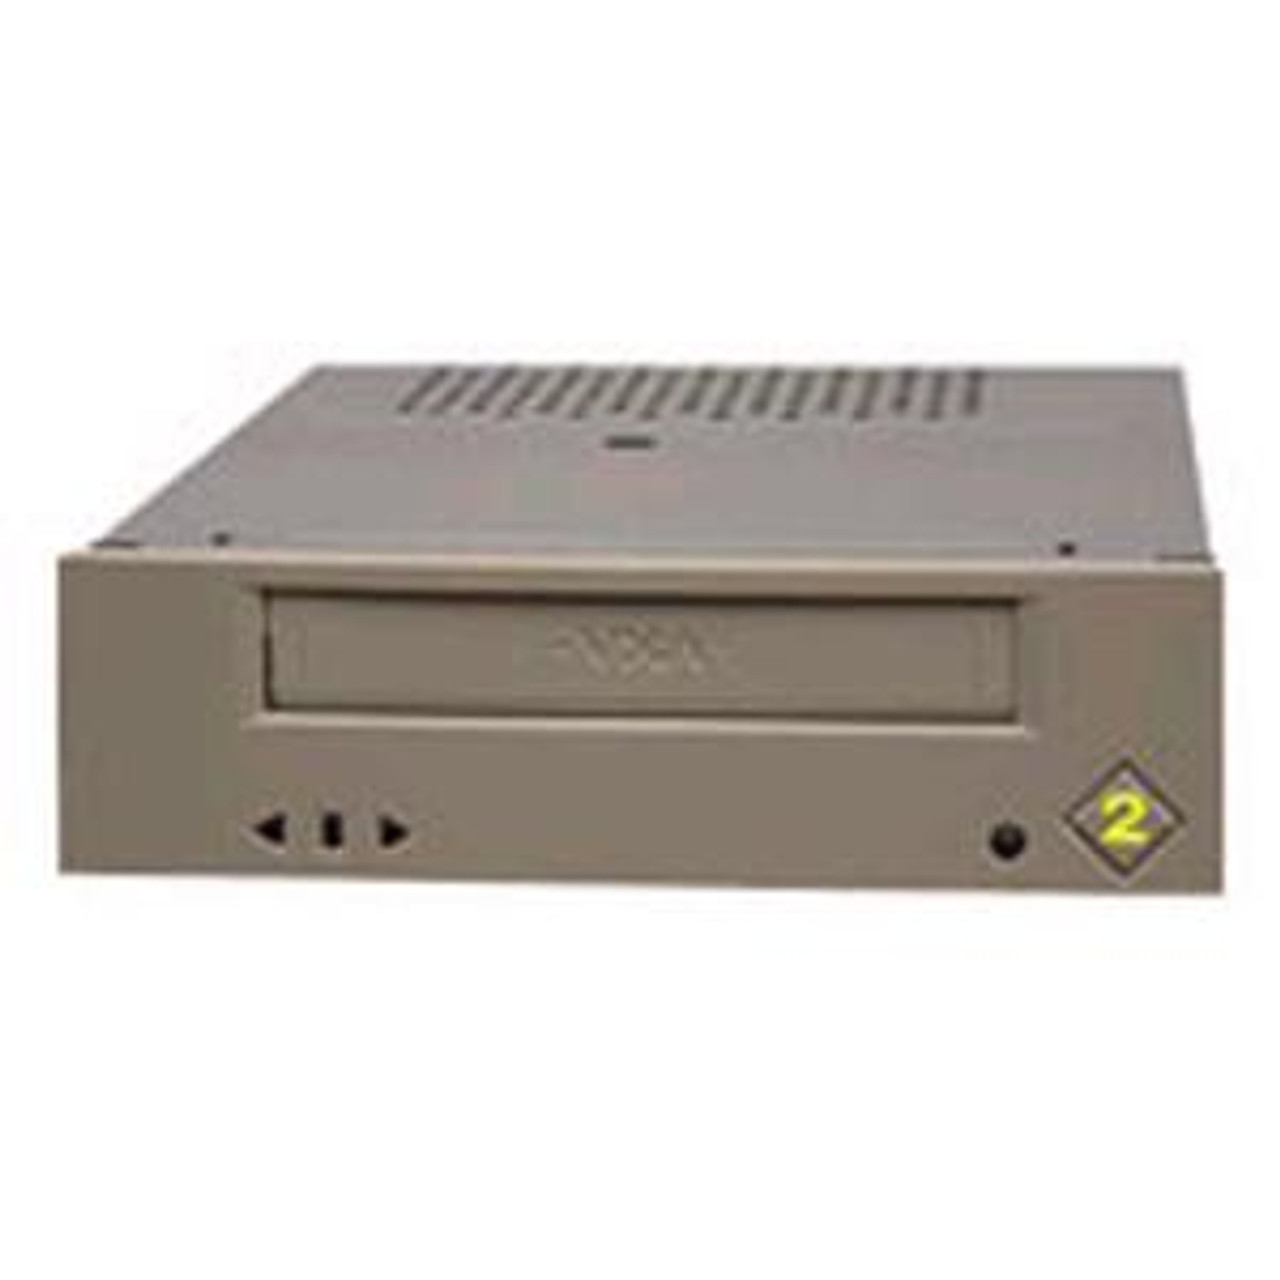 59P6746 - IBM VXA-2 Internal Tape Drive - 80GB (Native)/160GB (Compressed) - 5.25 1/2H Internal